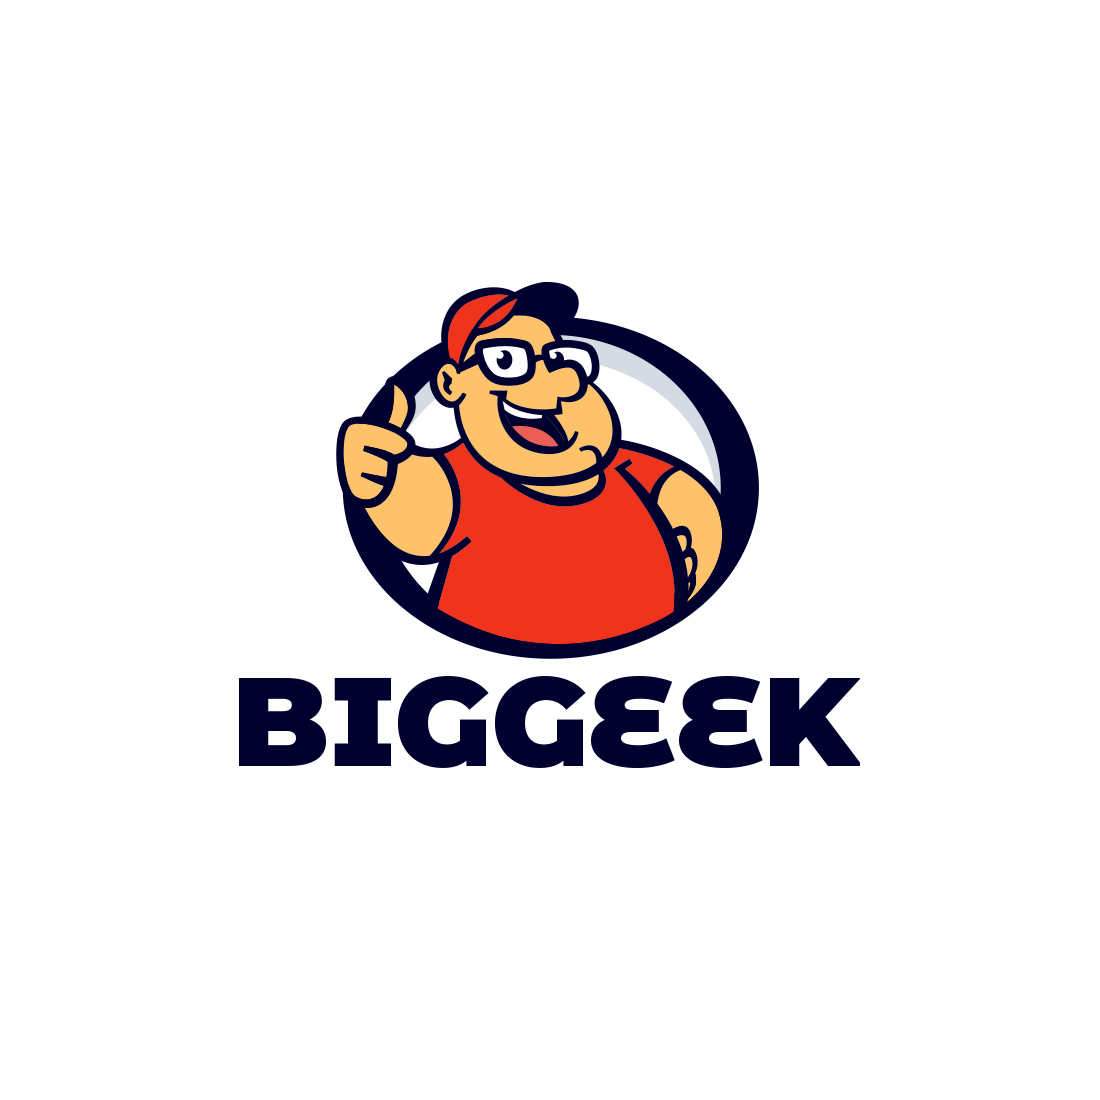 Big Geek Character Logo Design cover image.